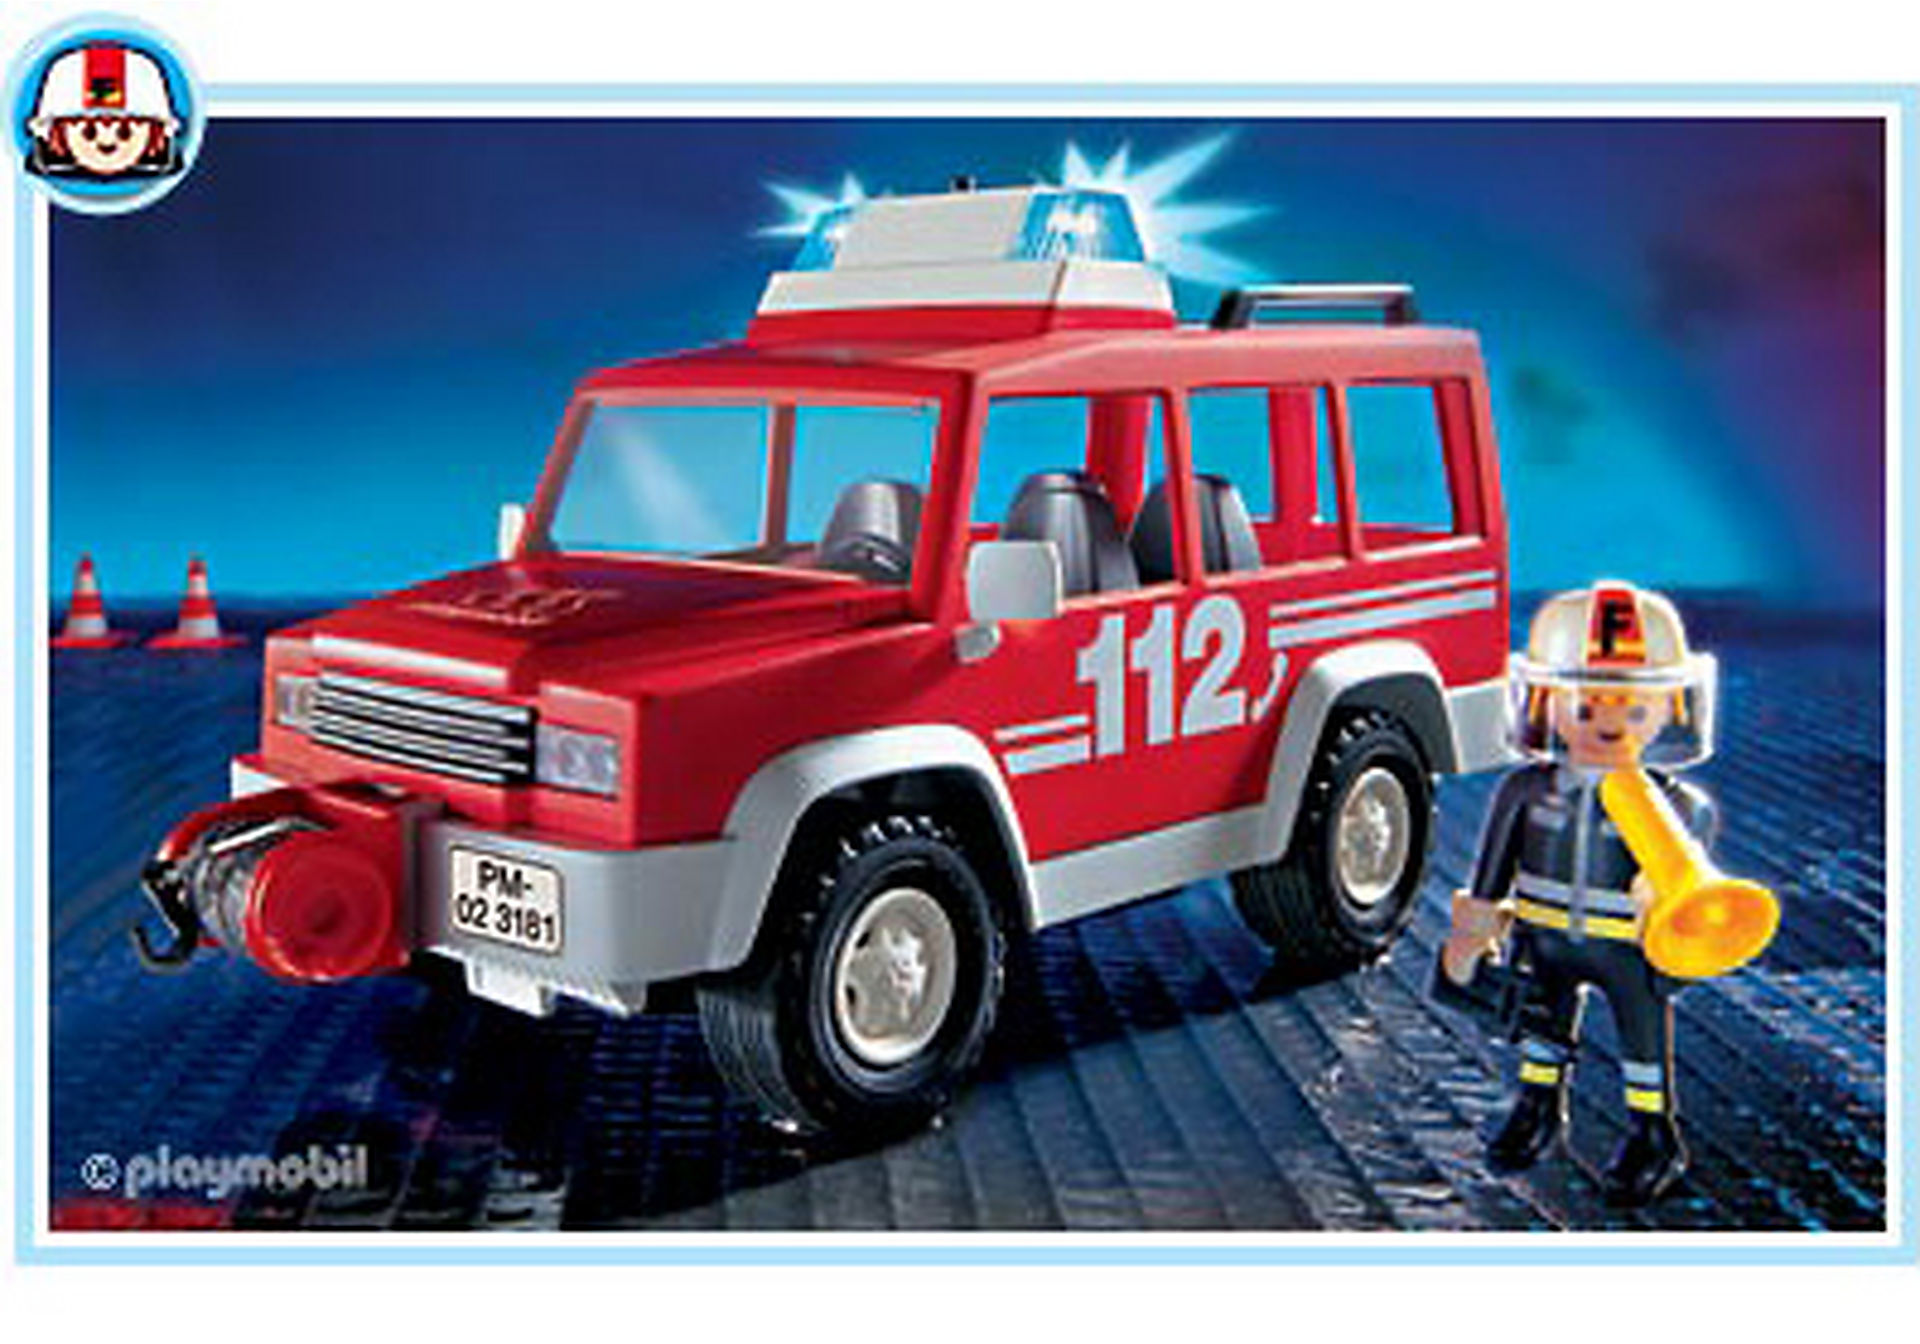 3181-A Feuerwehrvorausfahrzeug zoom image1